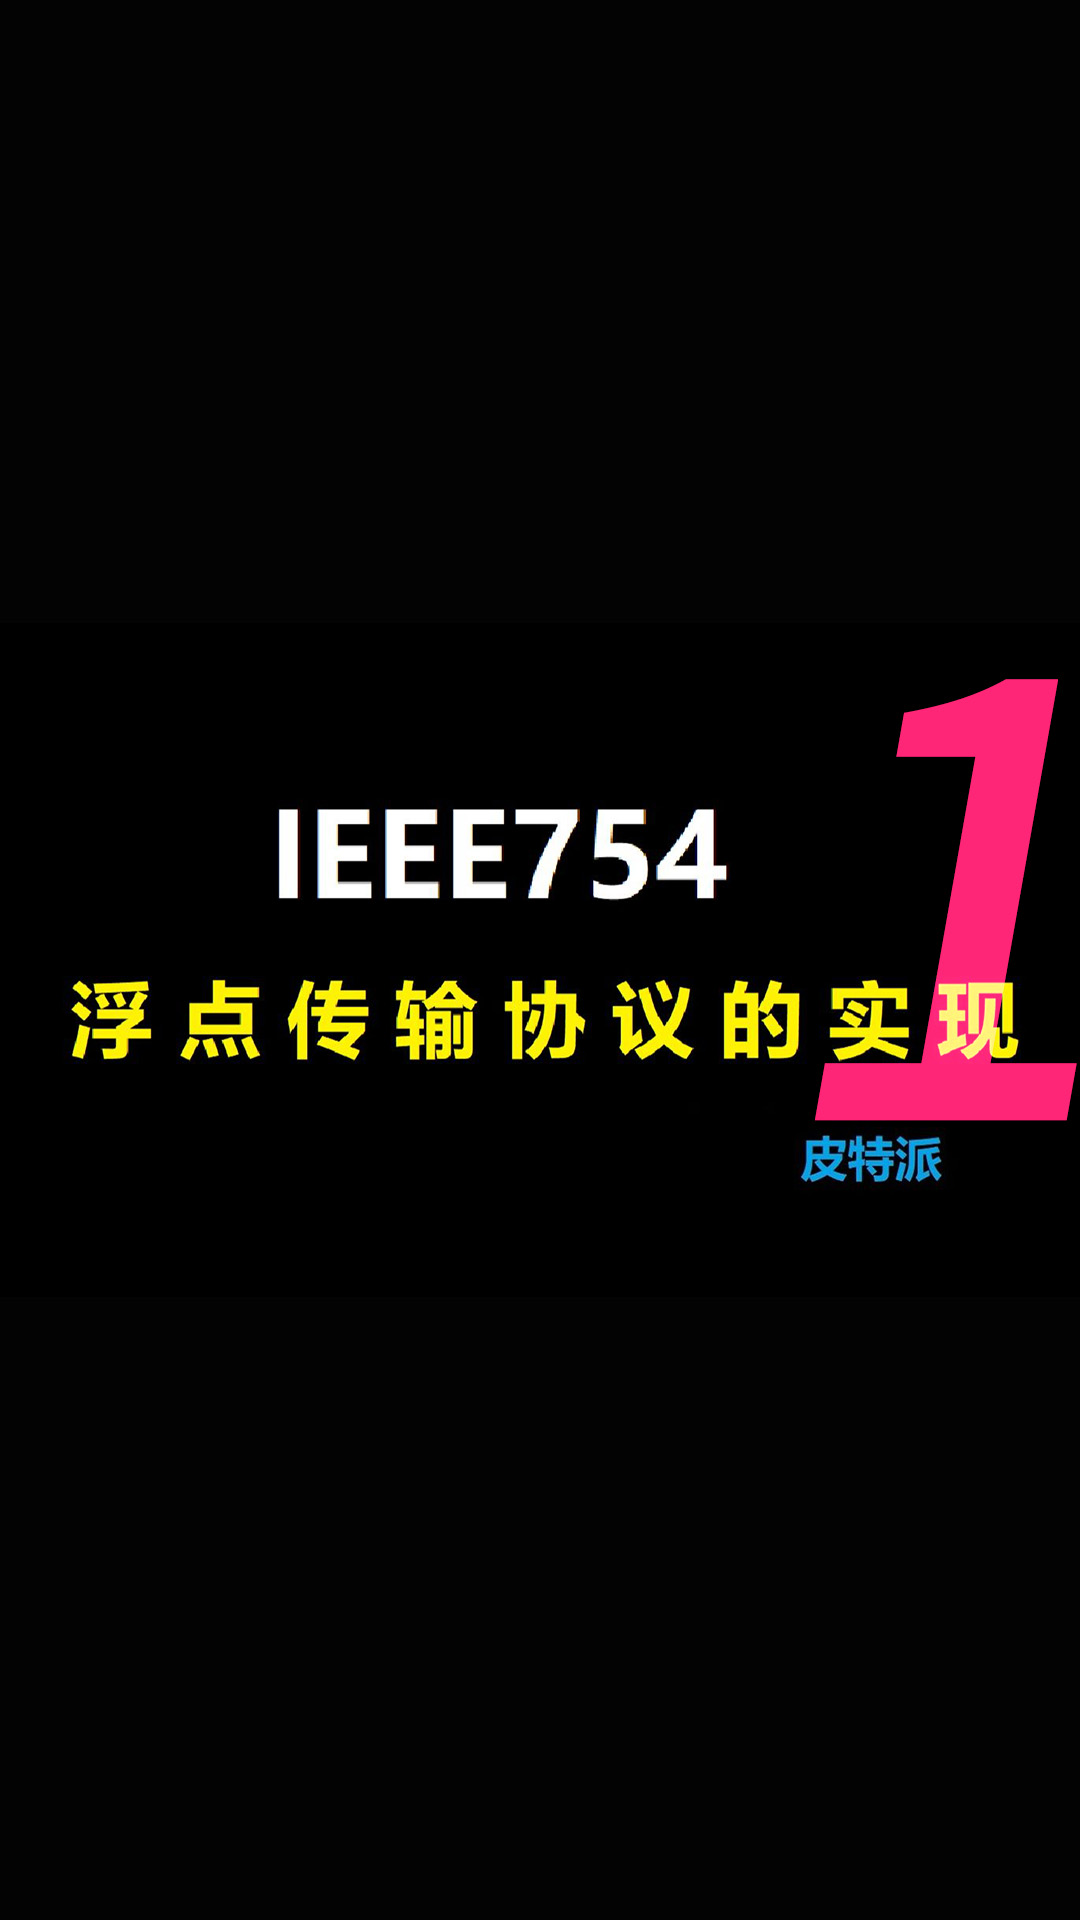 IEEE754 浮点传输协议的实现1